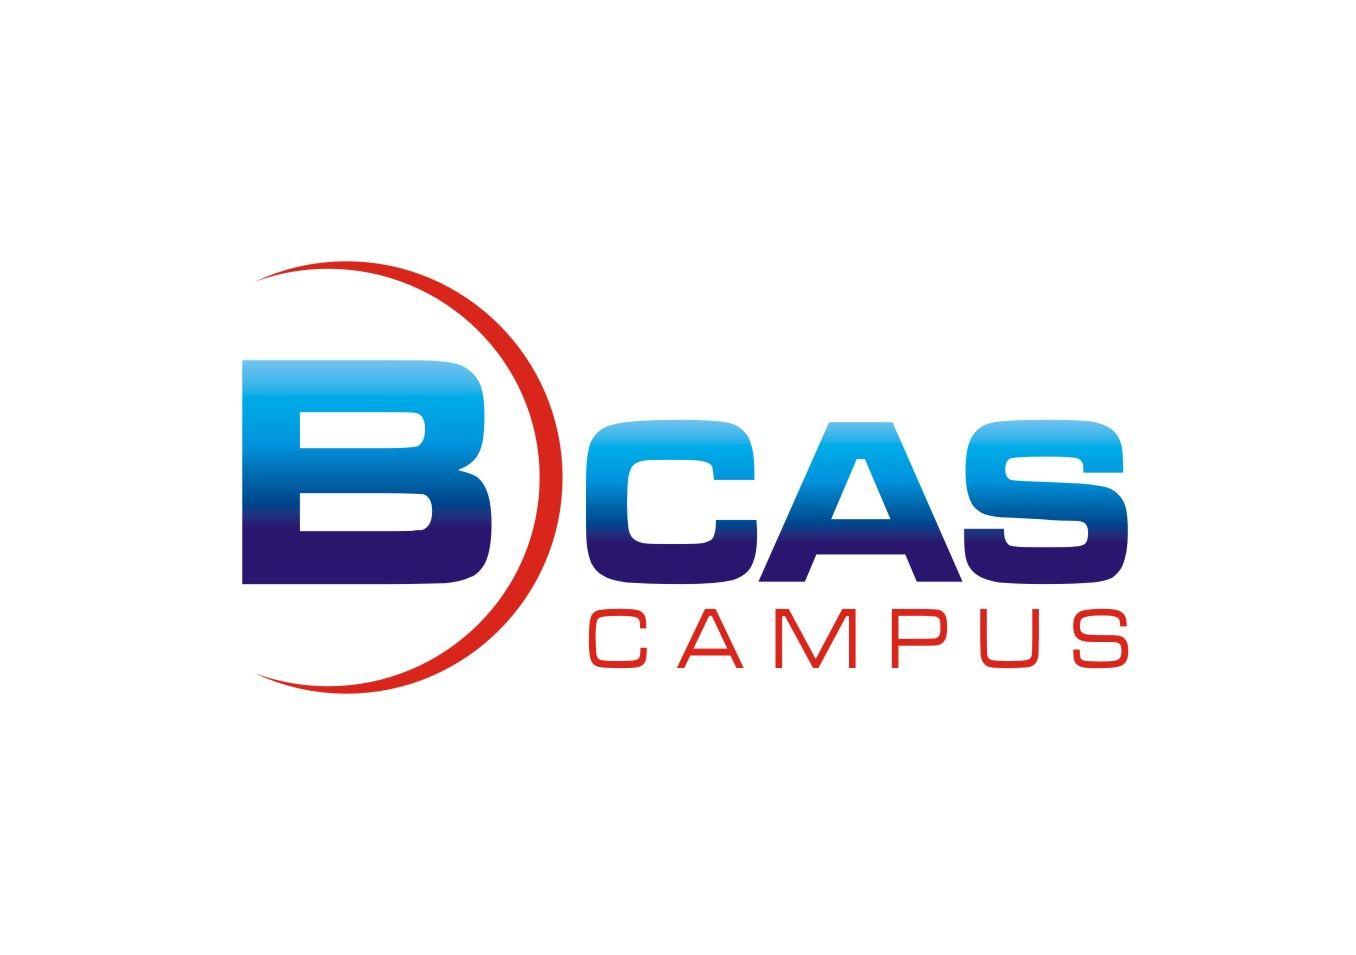 Bcas Campus Logo - Bold, Serious, University Logo Design for BCAS CAMPUS by lrbalaji ...